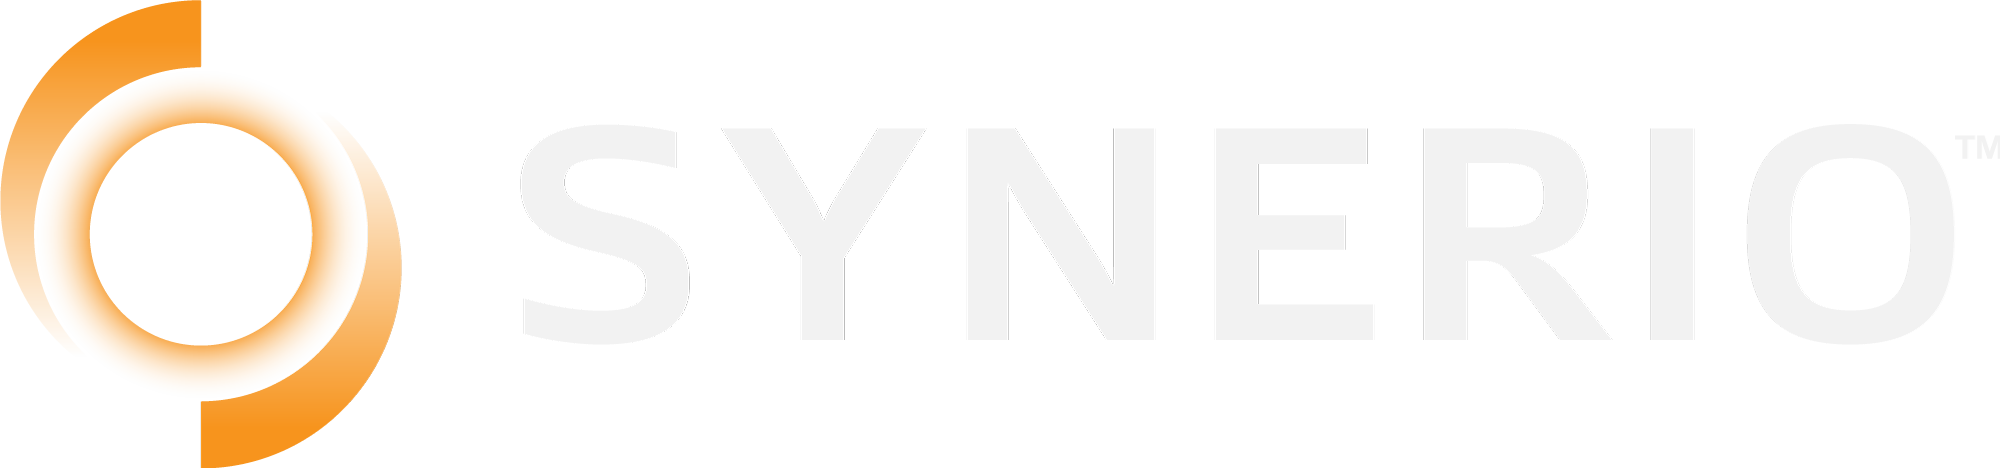 Synerio Logo